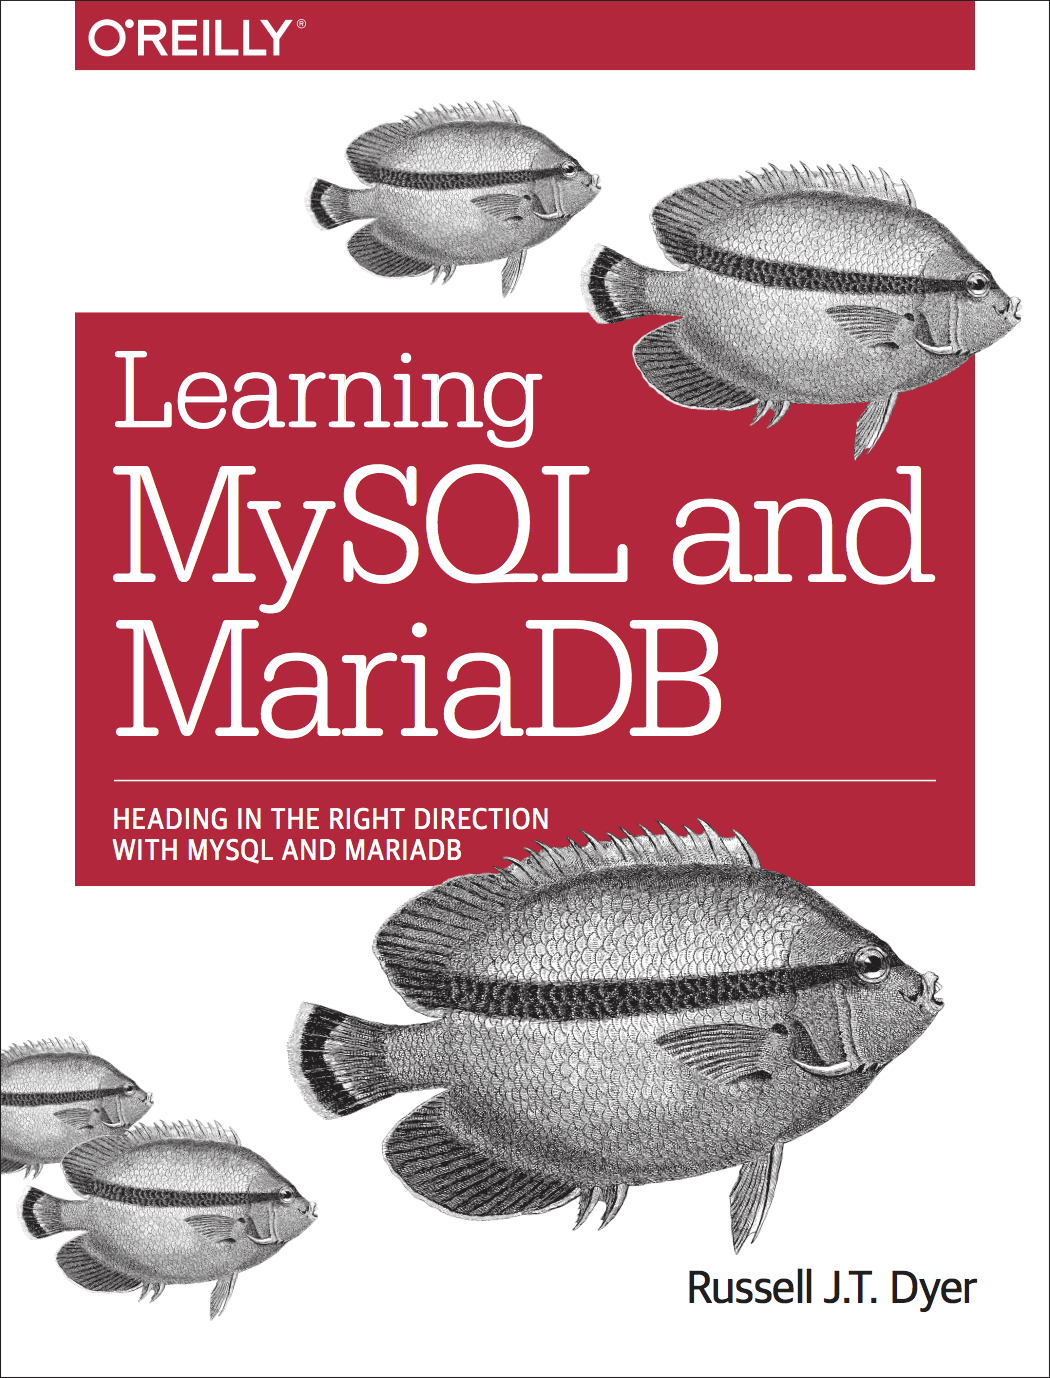 ../_images/learning-mysql-mariadb-book-cover.jpg